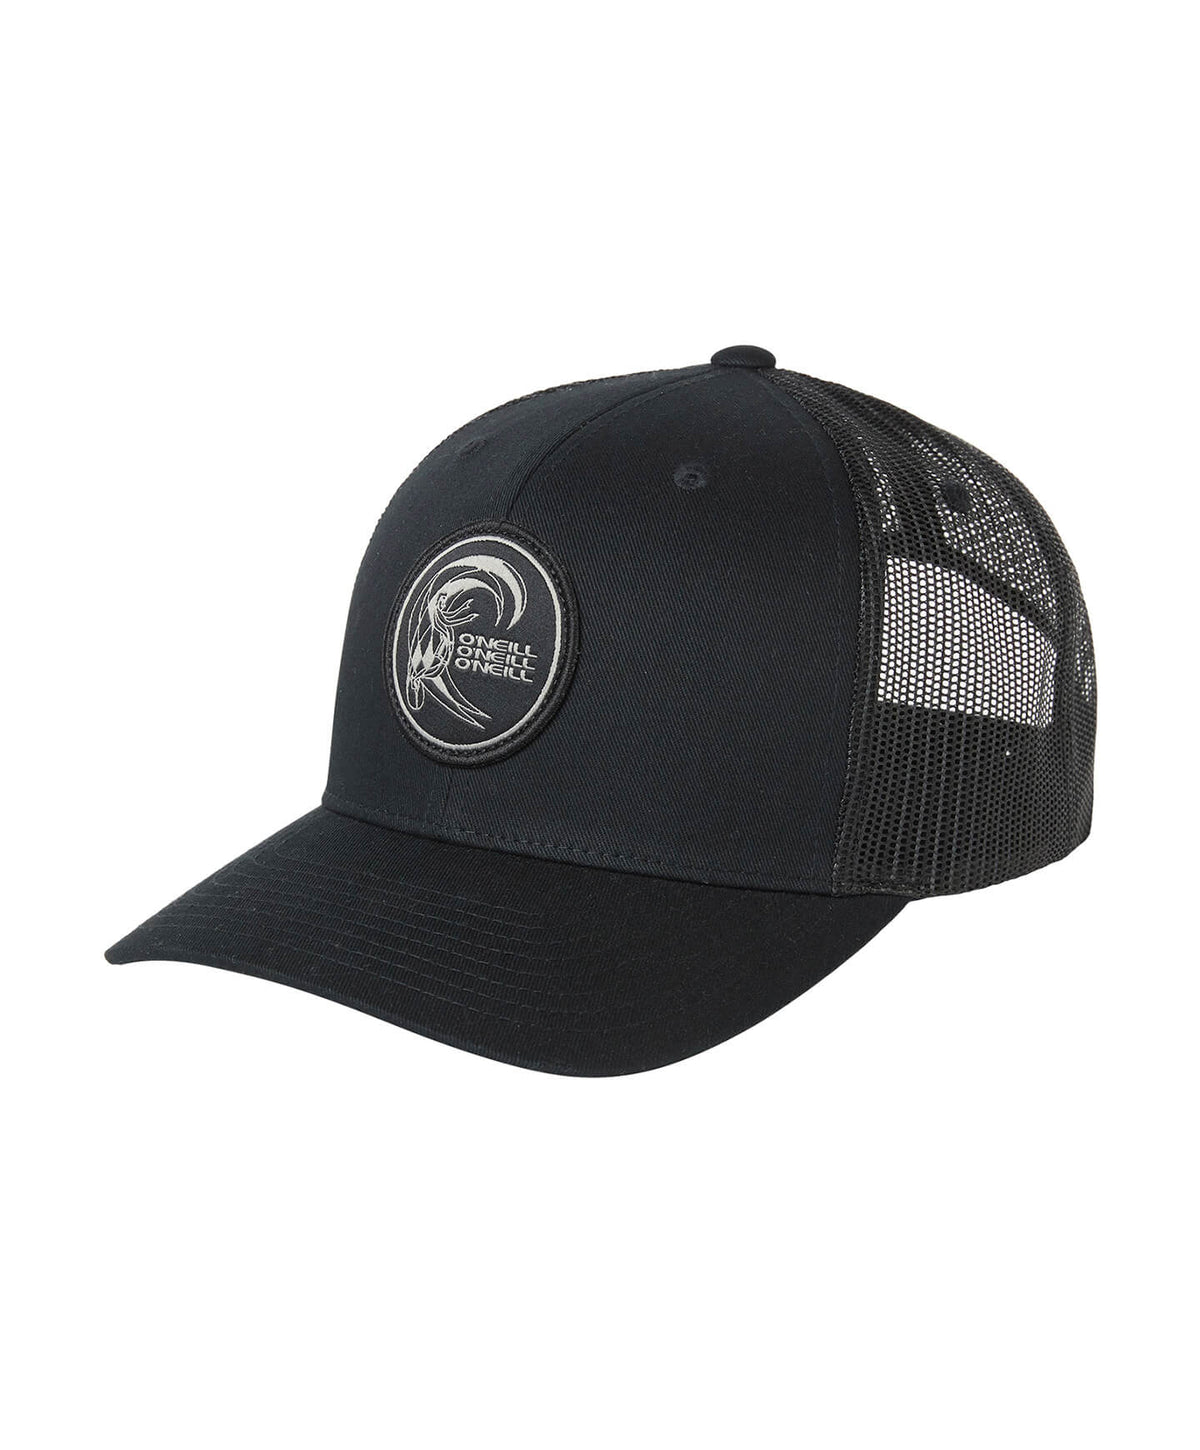 CS Trucker Hat - Black